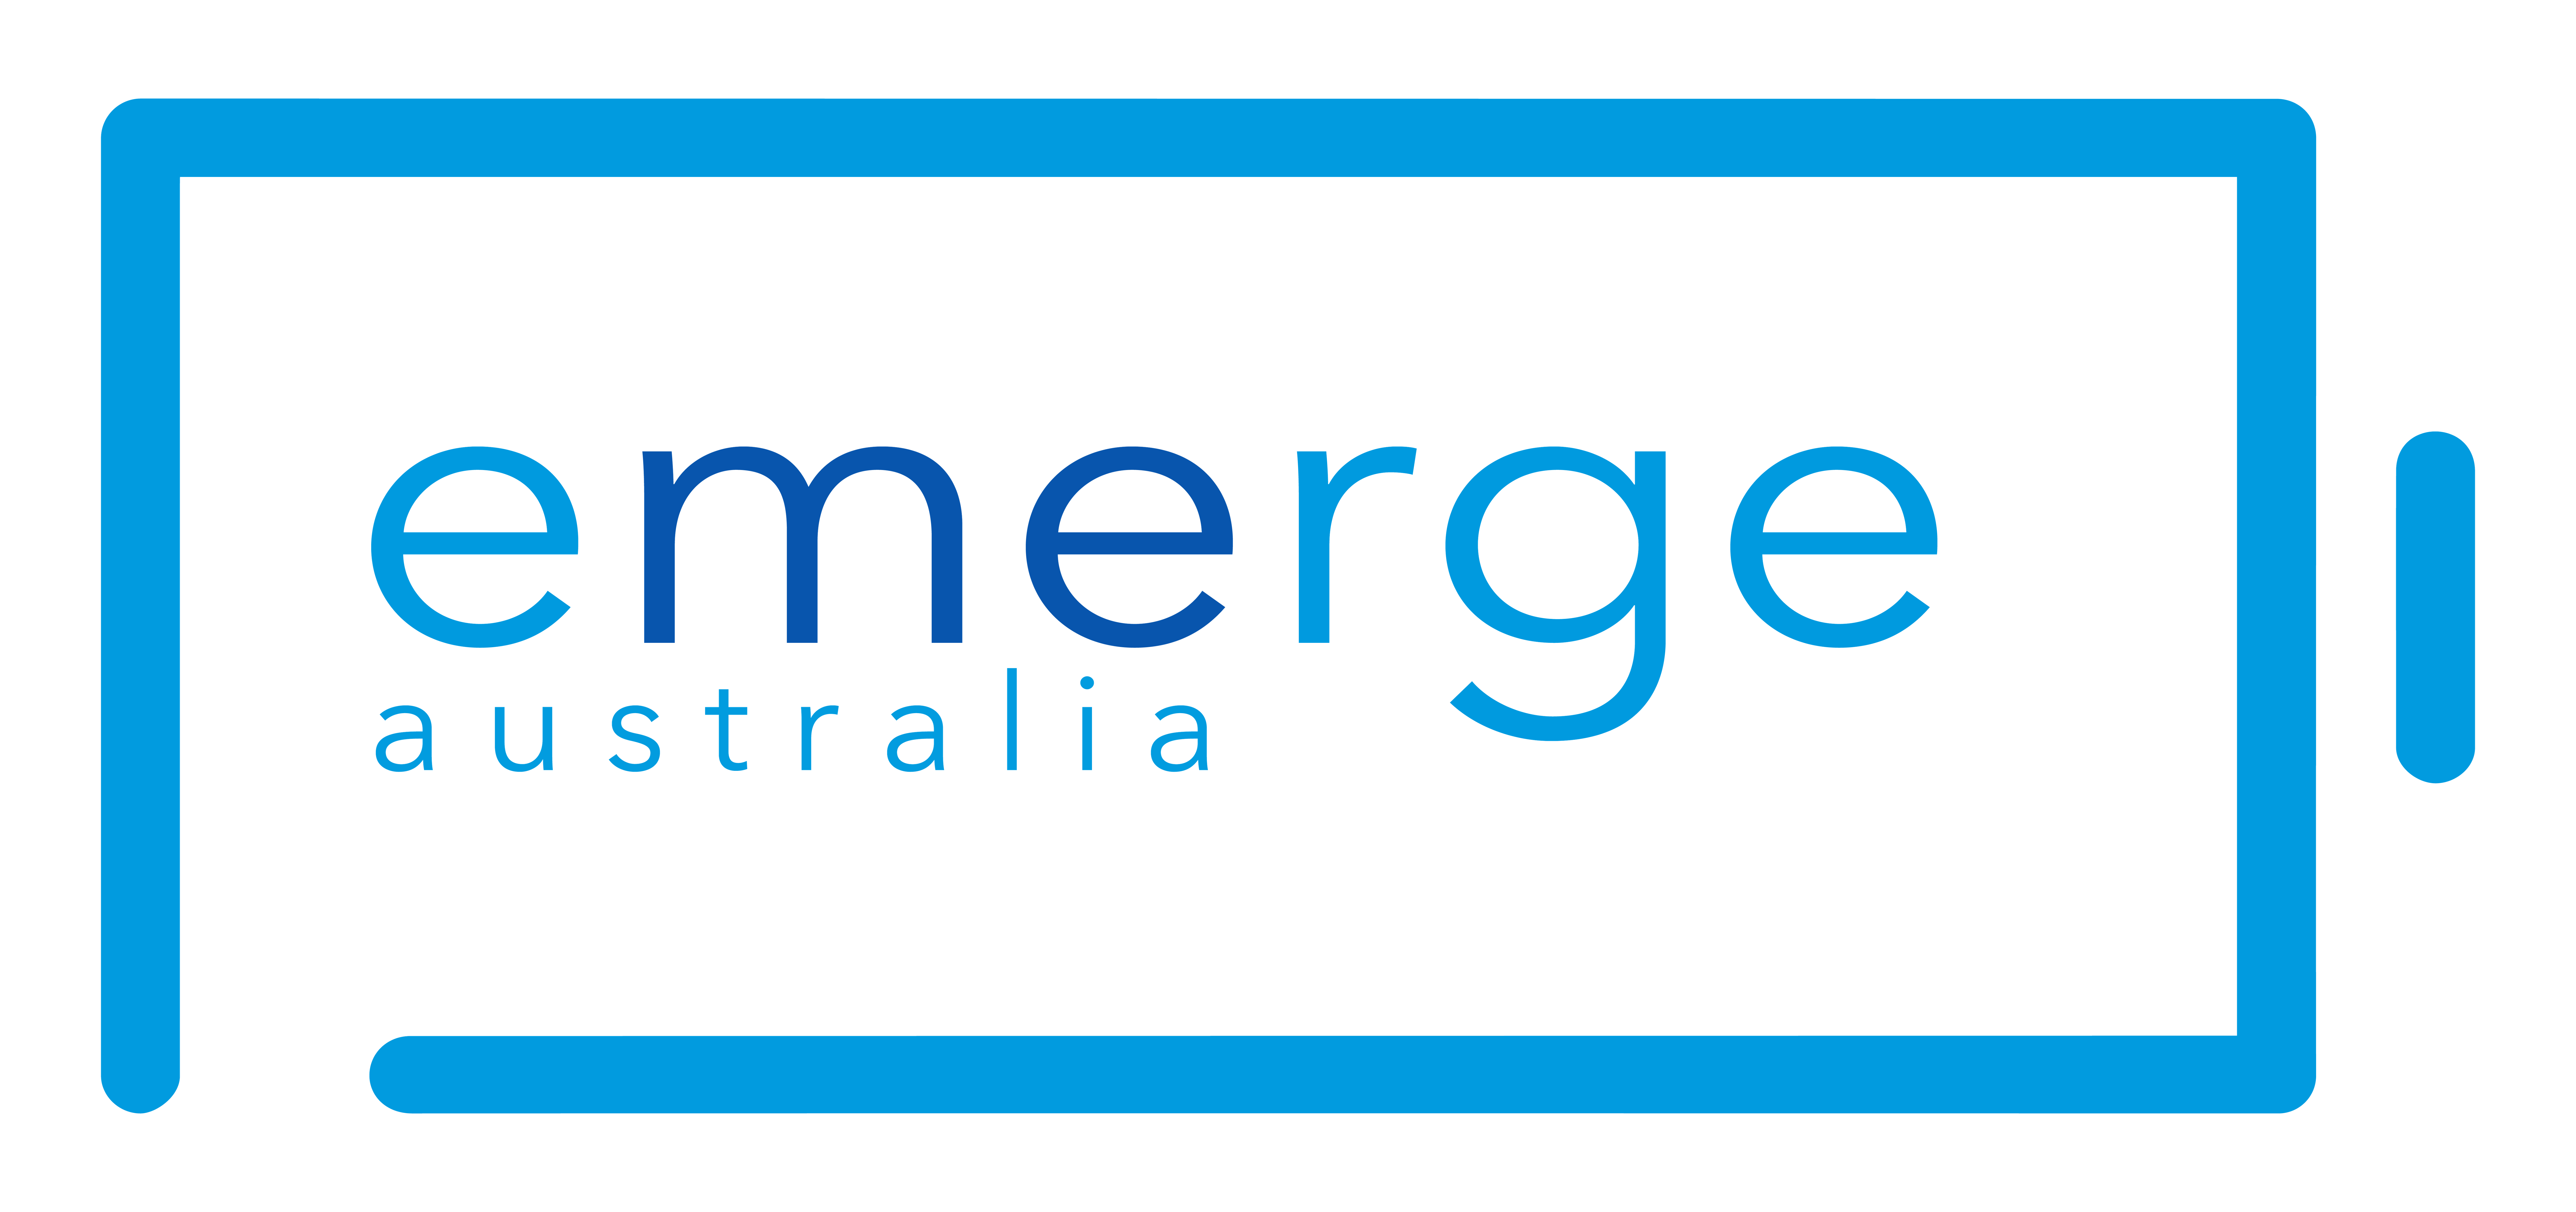 Emerge Australia logo